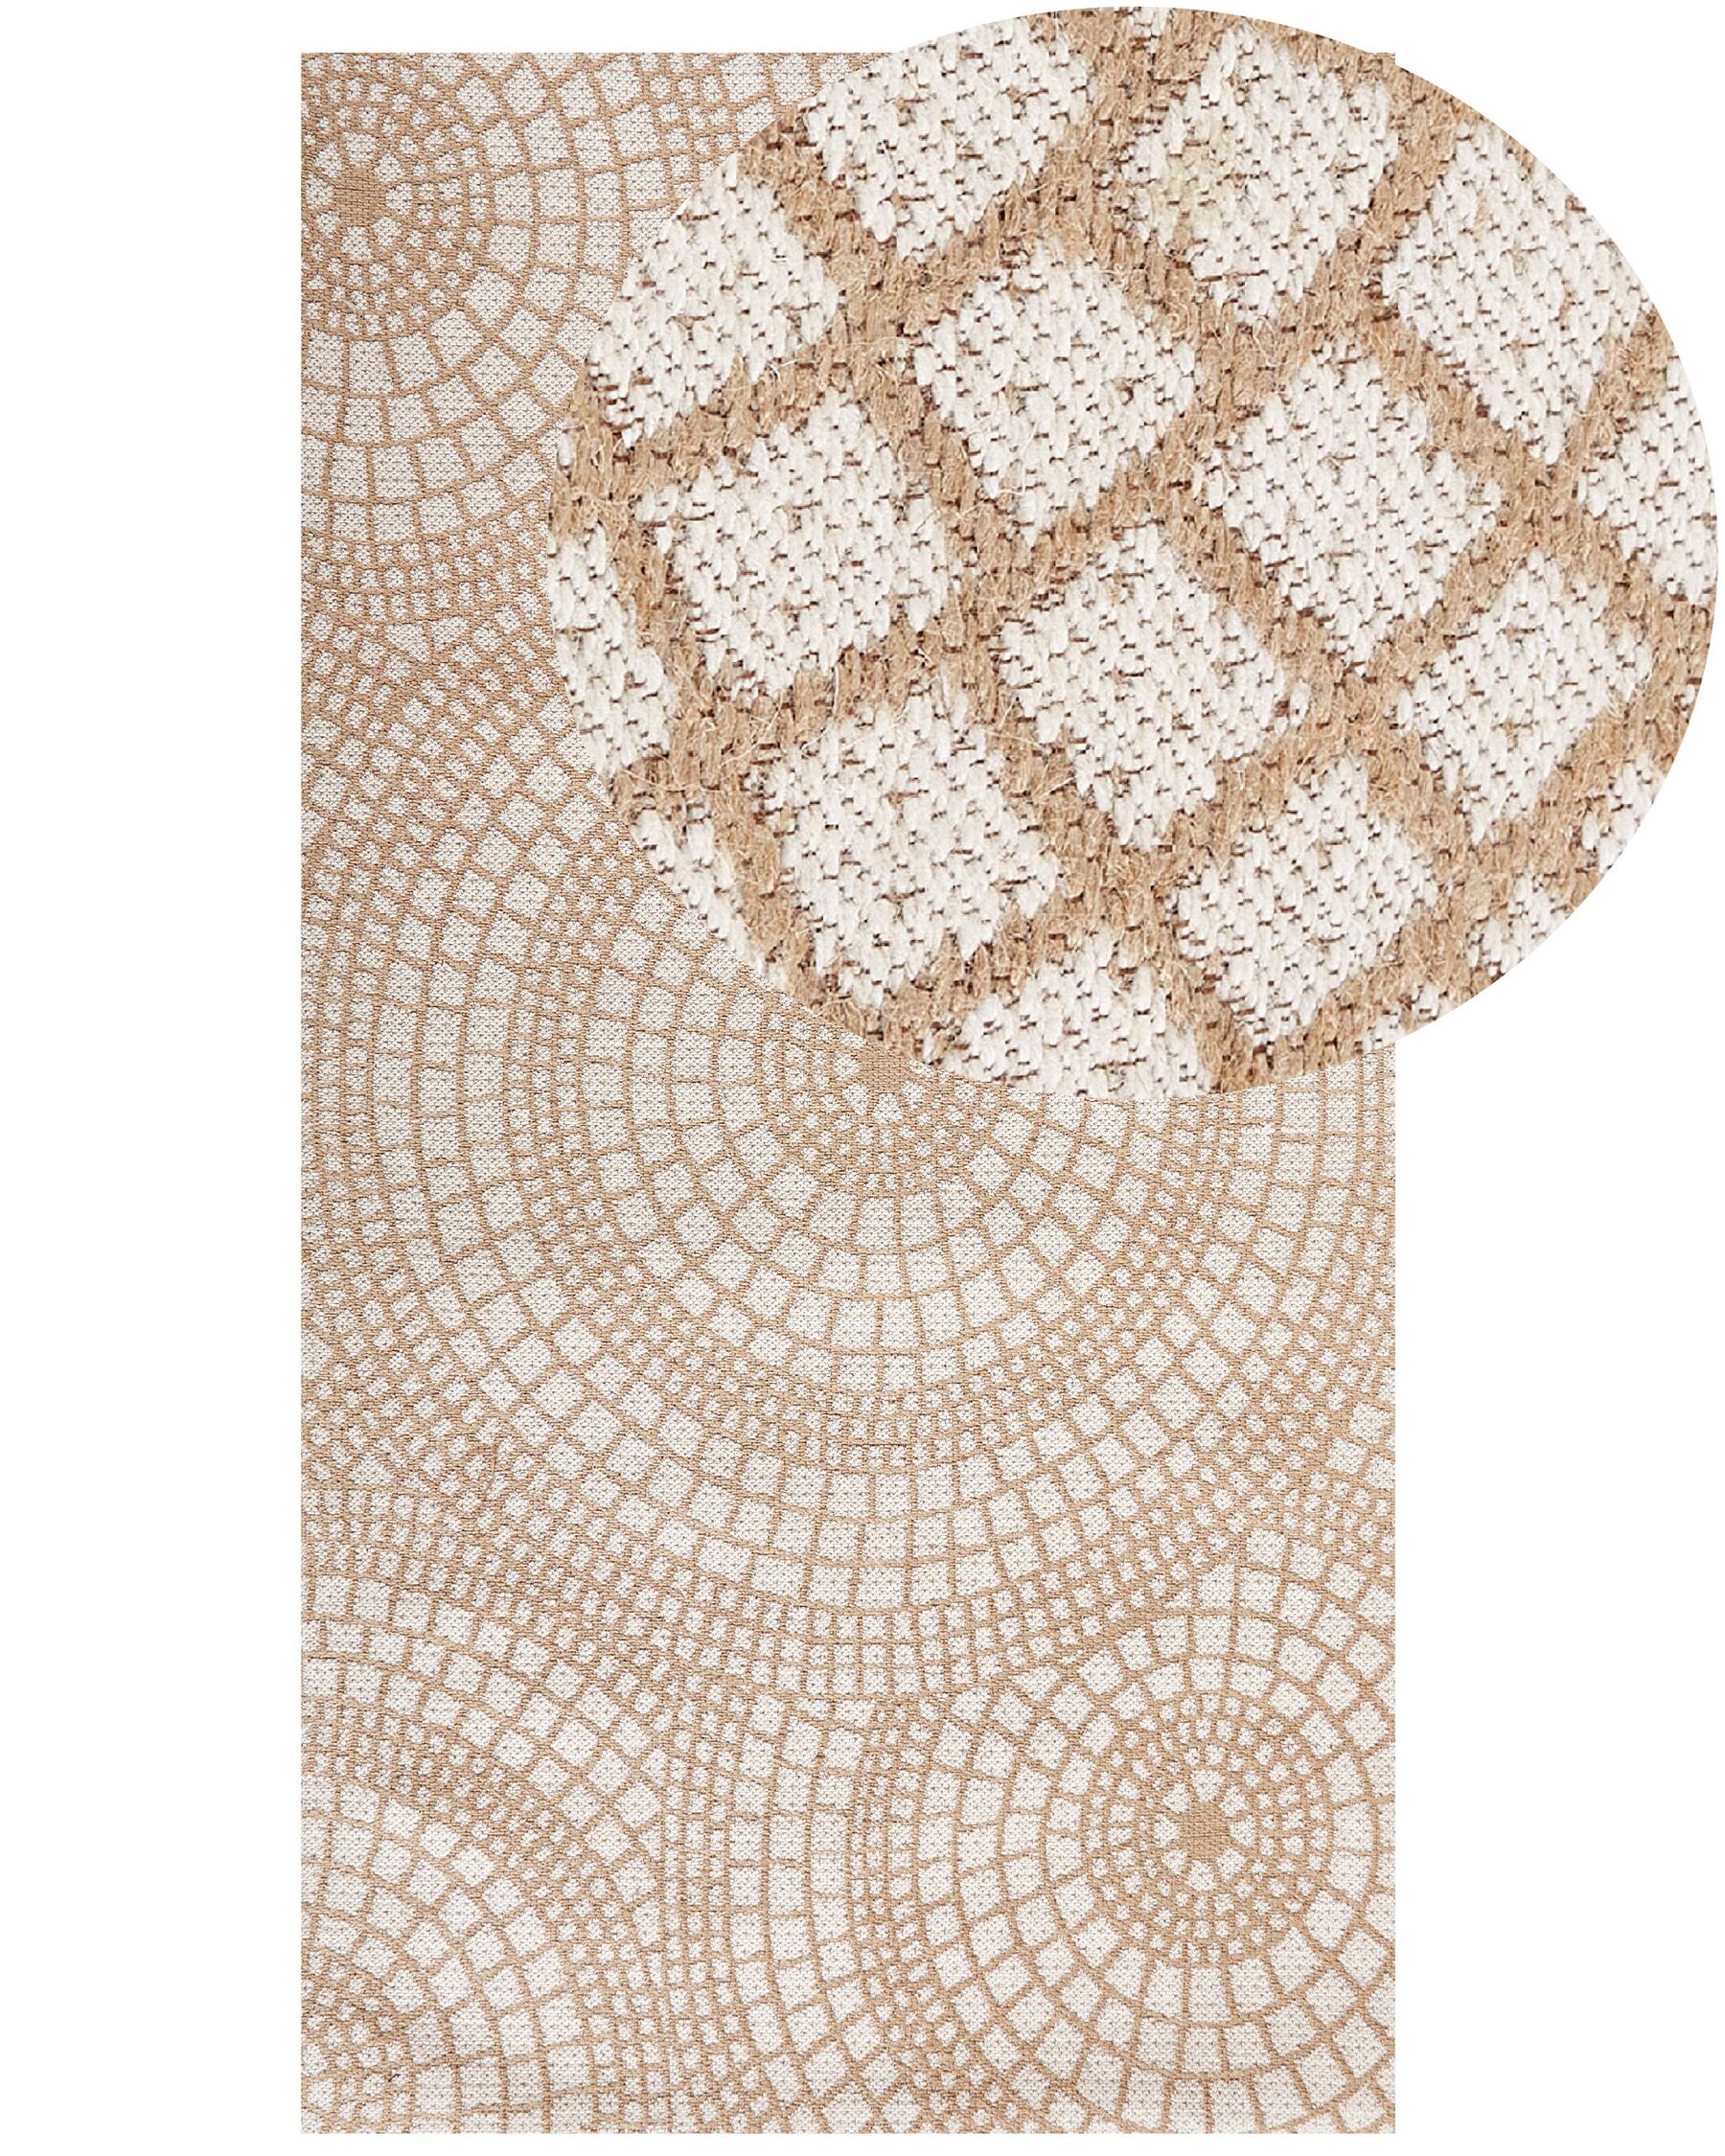 Teppich Jute beige / weiss 80 x 150 cm geometrisches Muster Kurzflor ARIBA_852812